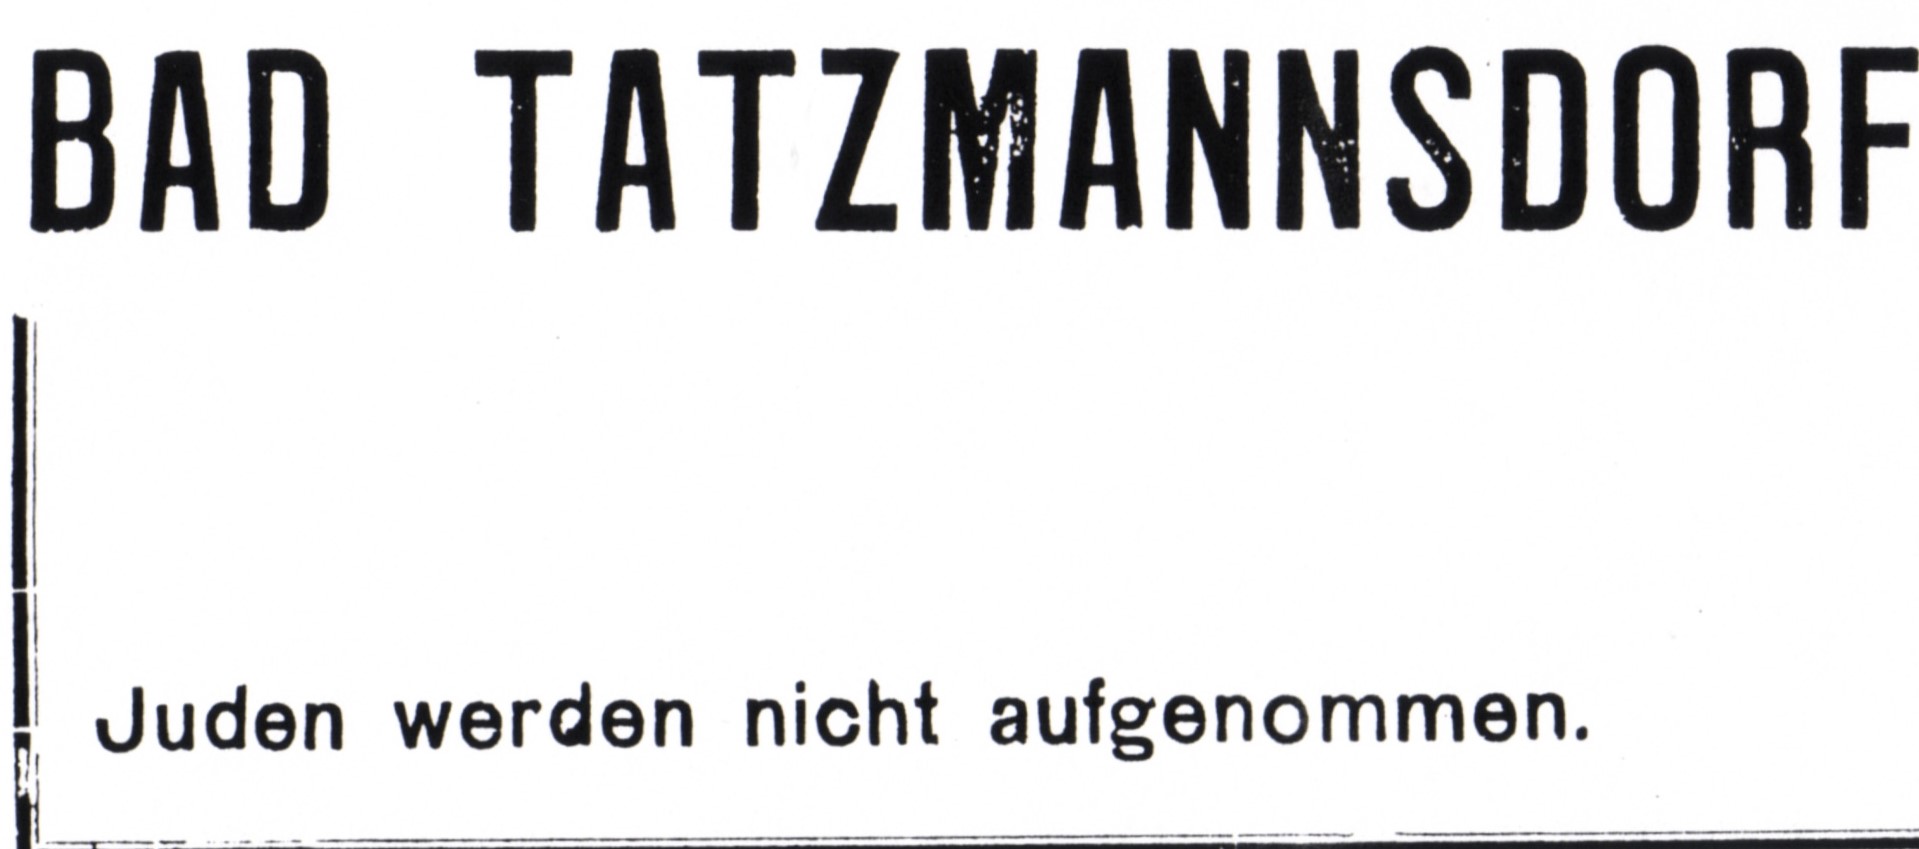 Bad Tatzmannsdorf.jpg